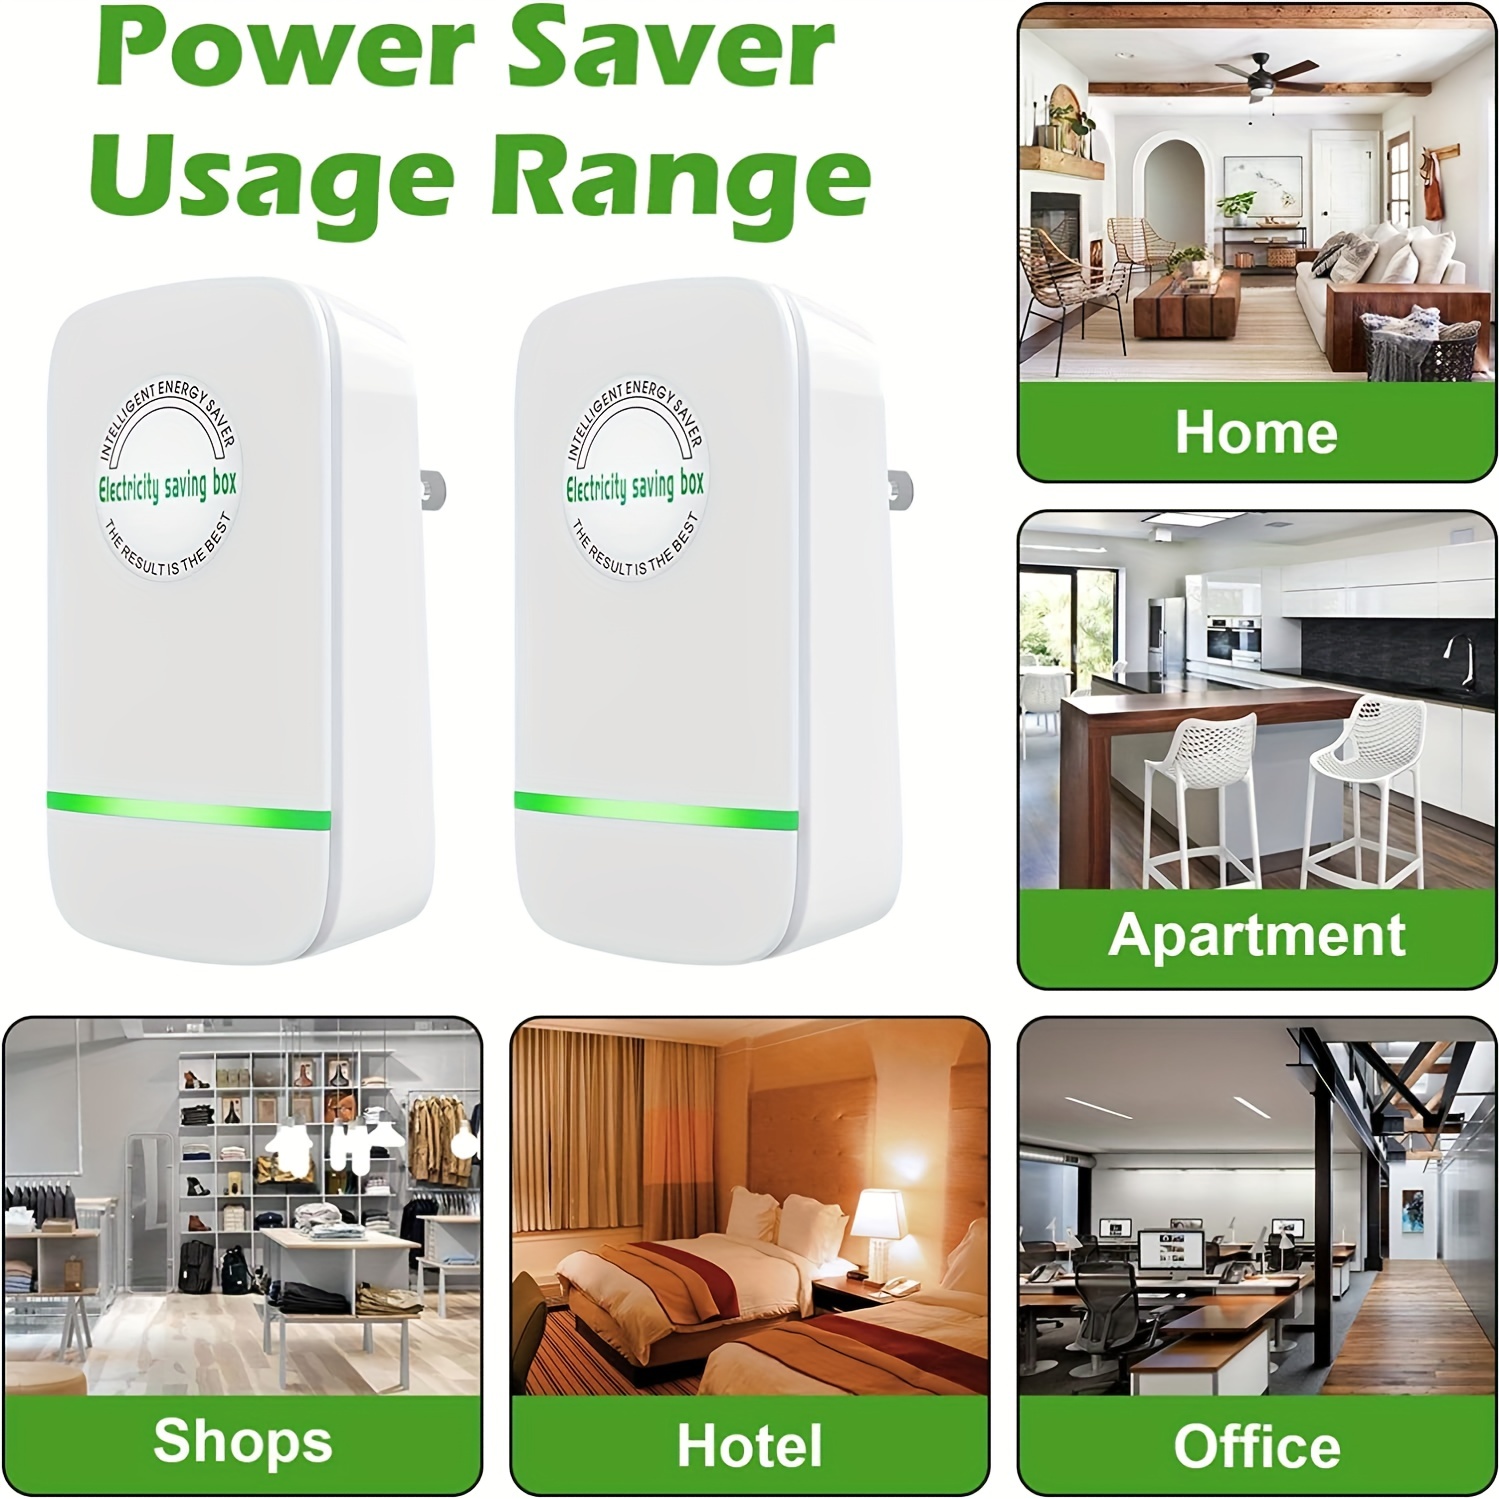 Power Saver Pro Energy Saver, Household Power Saver, Electricity Saving Box  Household Office Market Device Electric Energy Saving Device, Electric